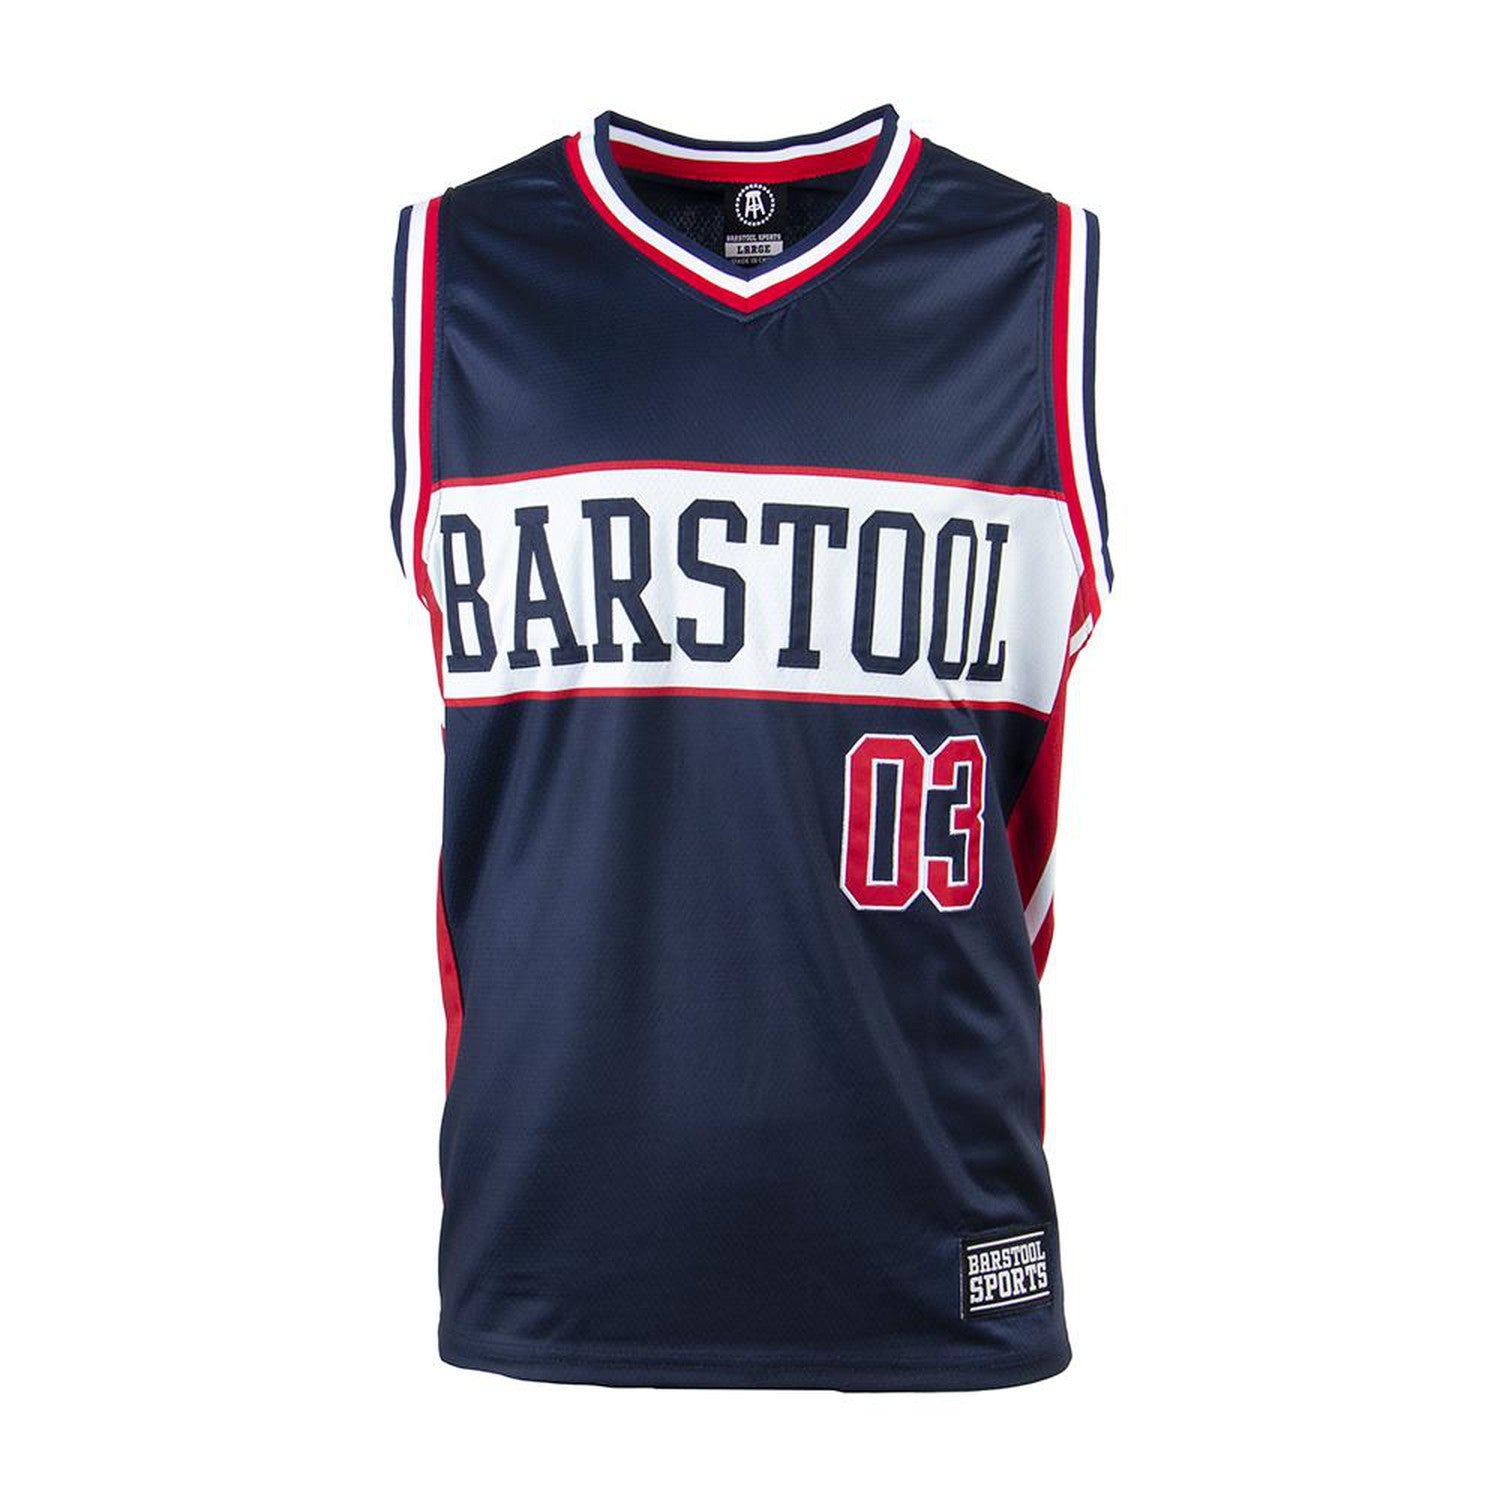 Barstool Sports Authentic Basketball Jersey | Barstool Sports Navy